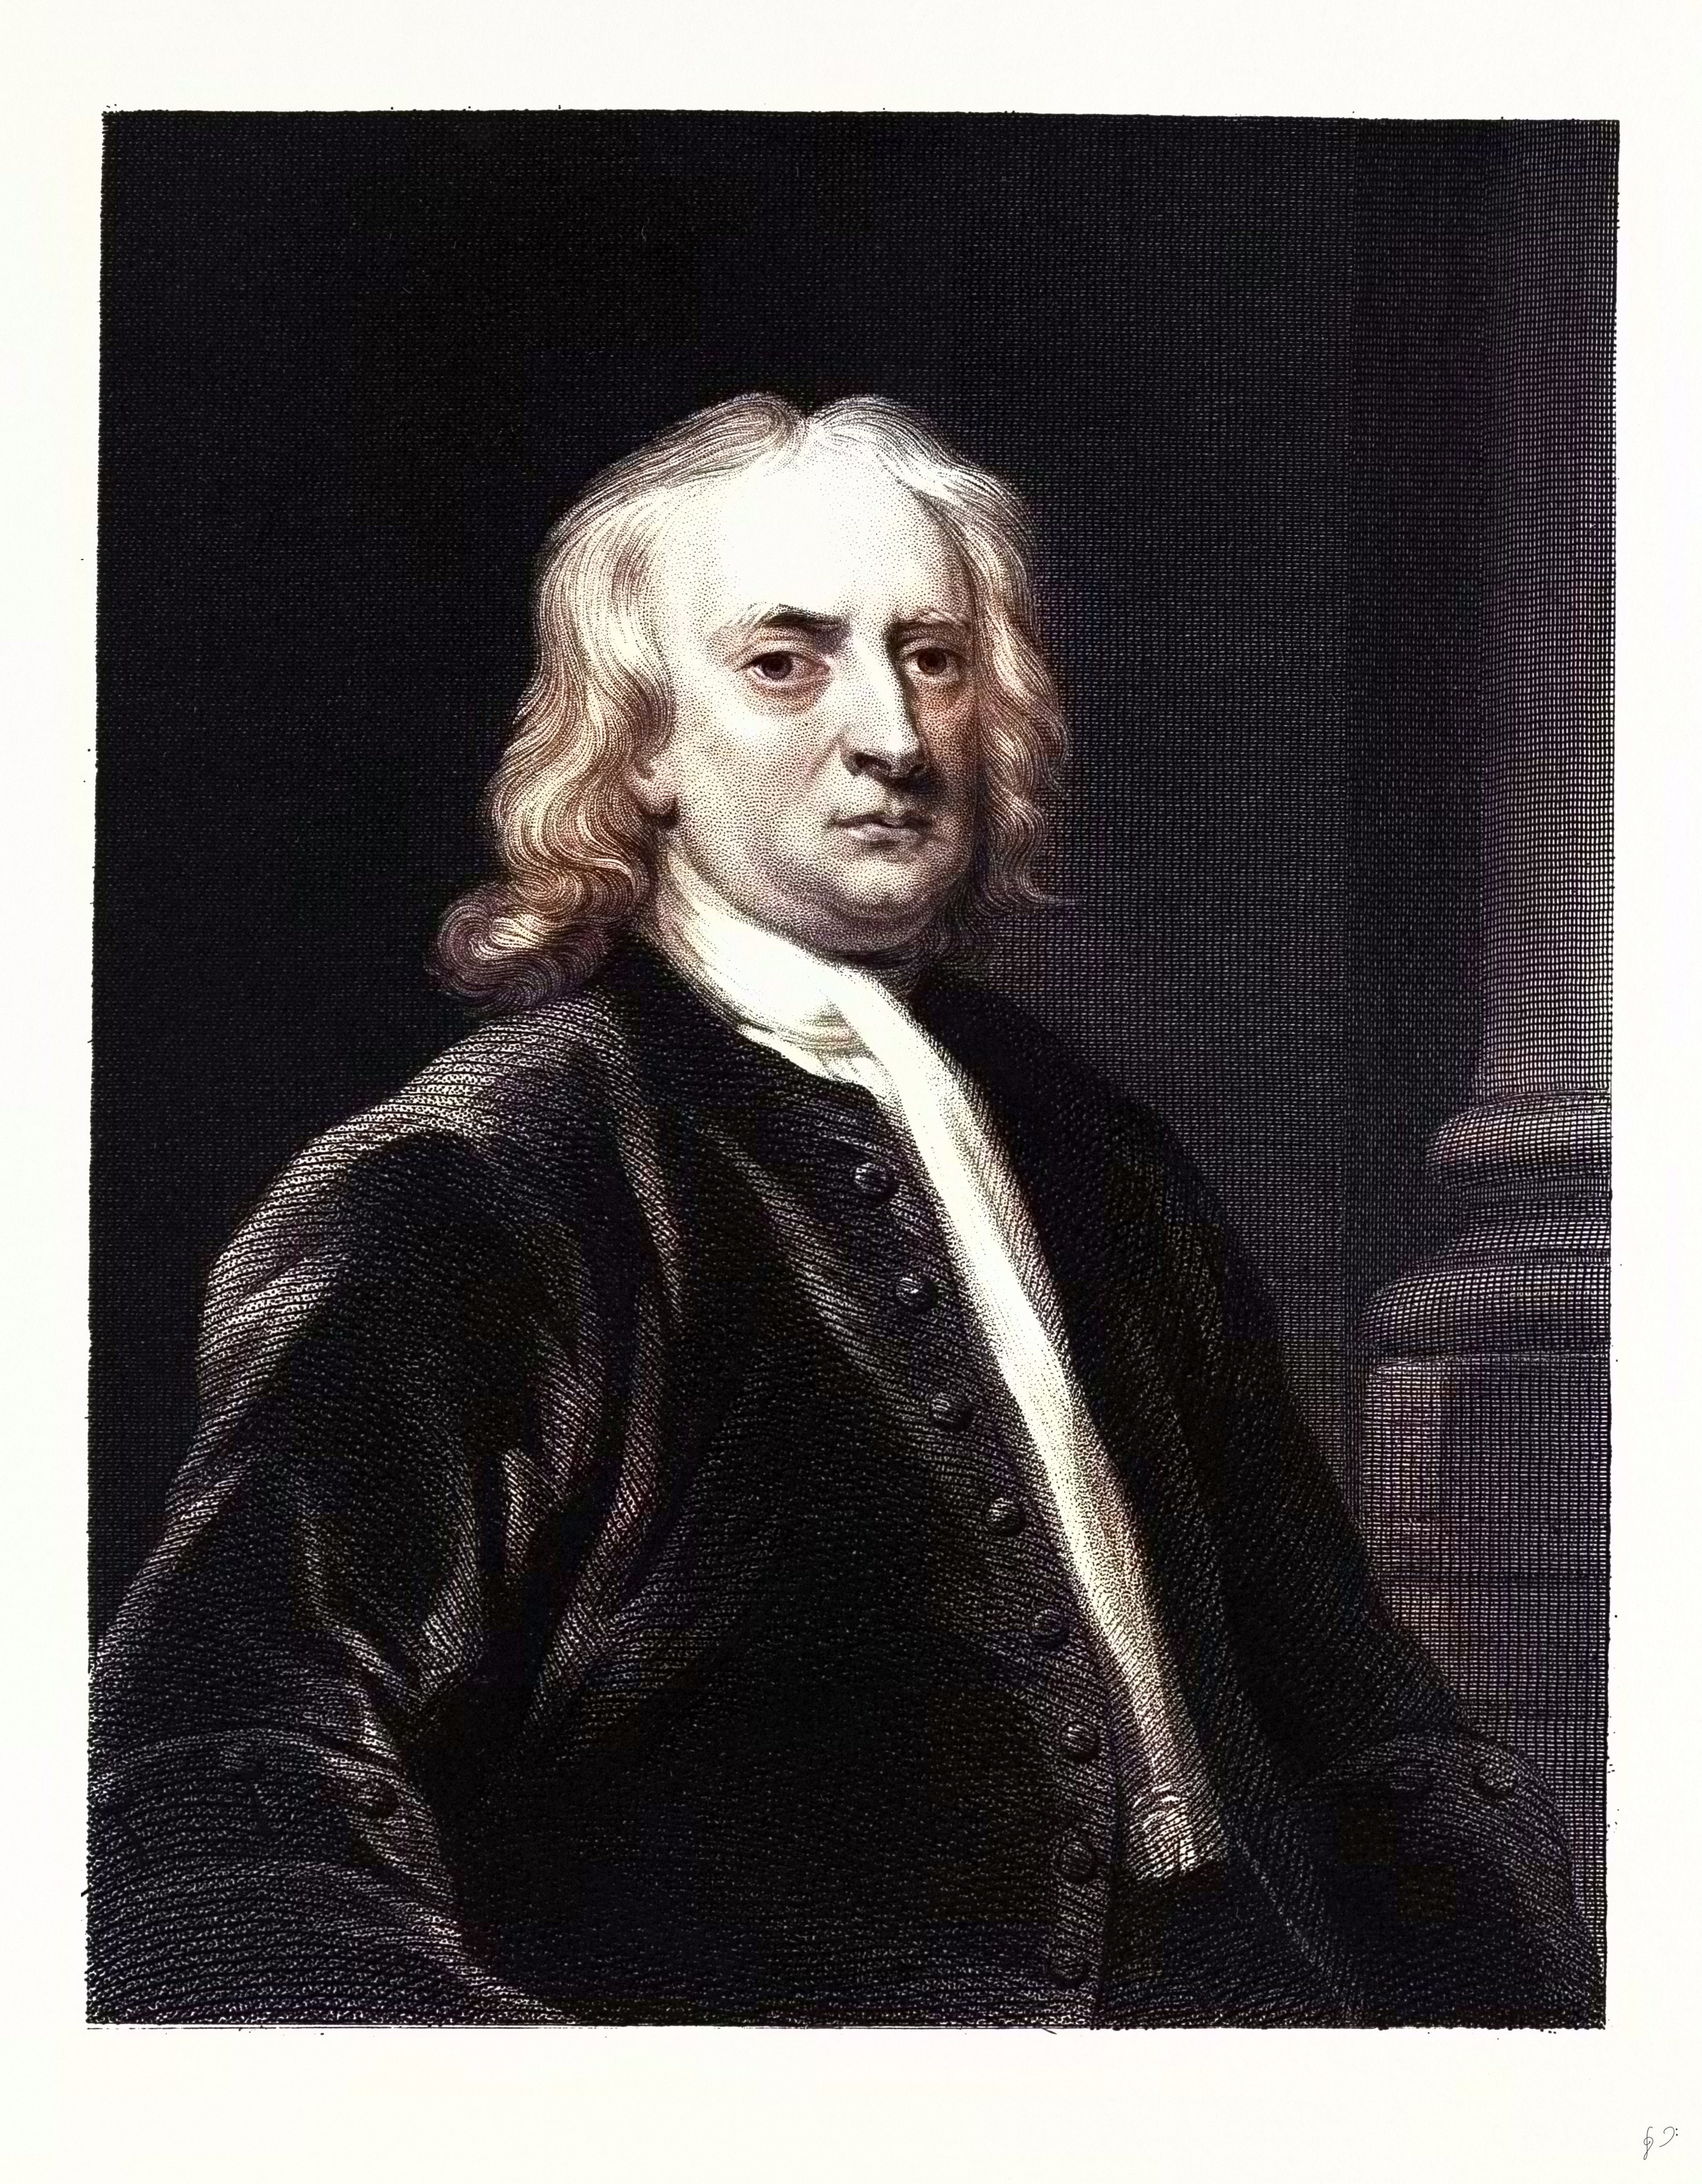 A portrait of Sir Isaac Newton